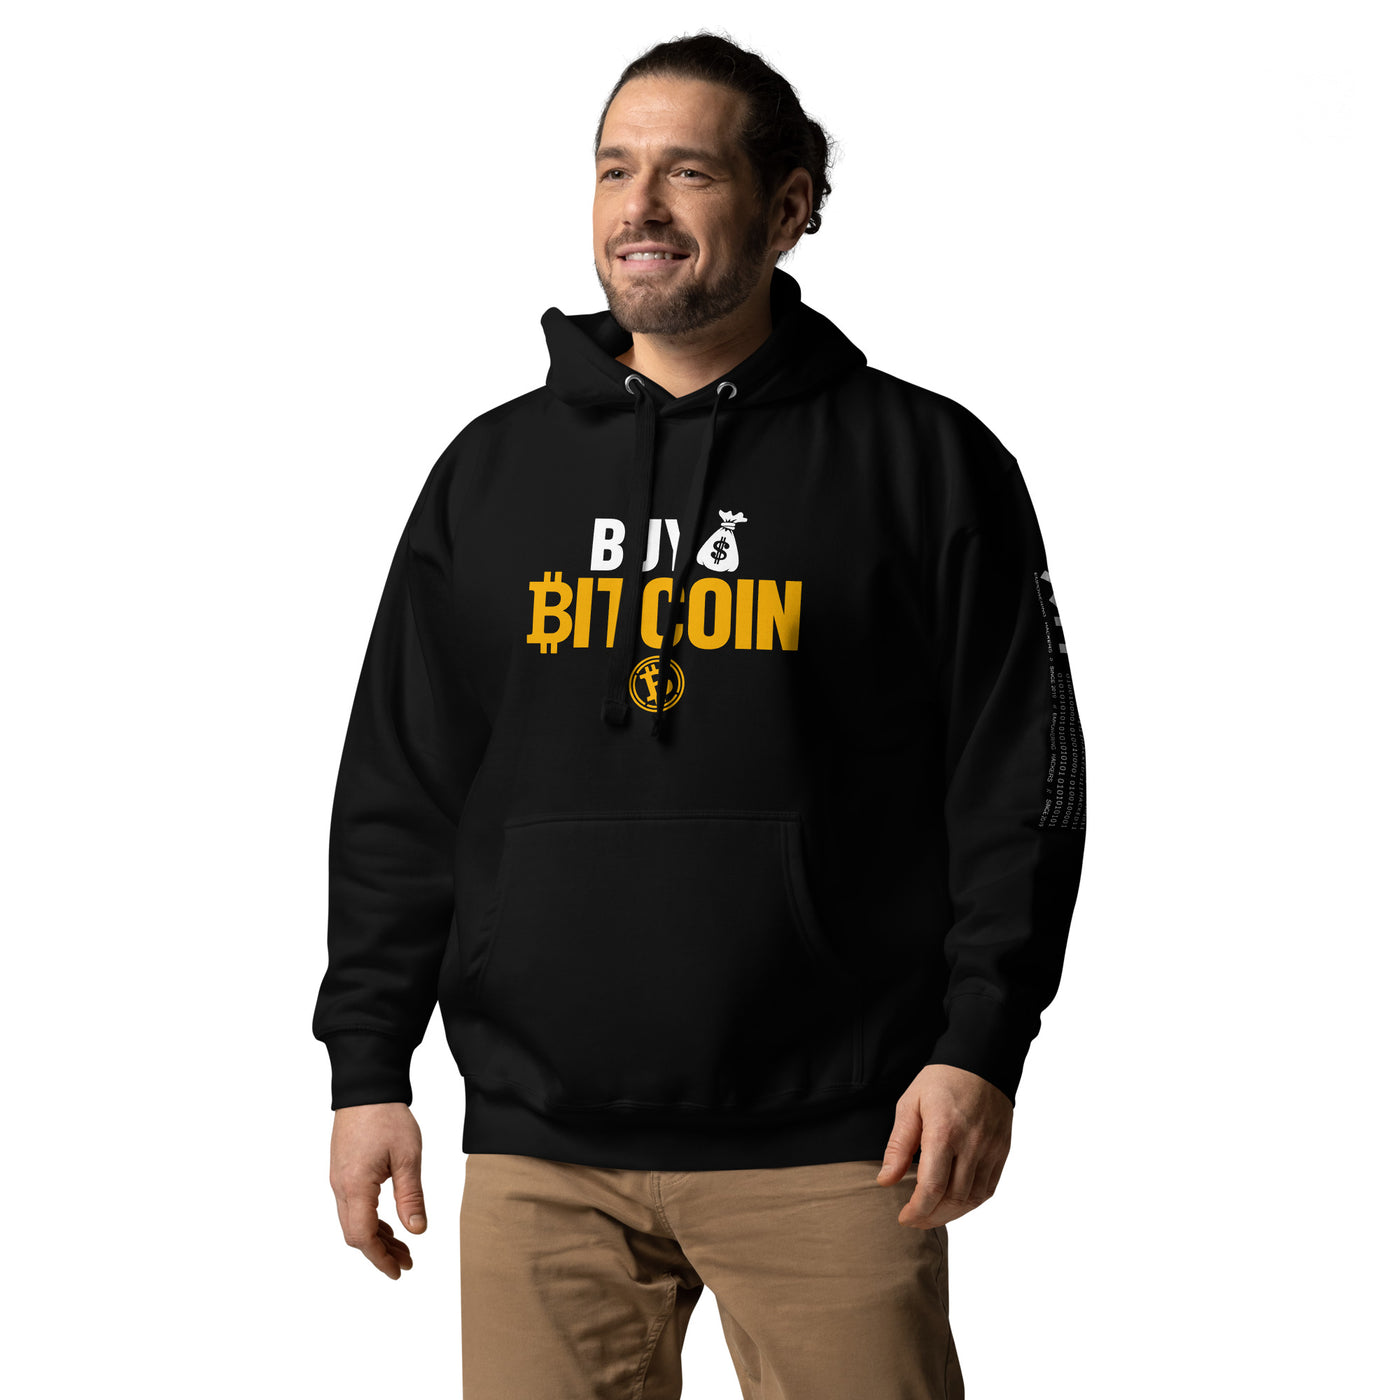 Buy Bitcoin Unisex Hoodie